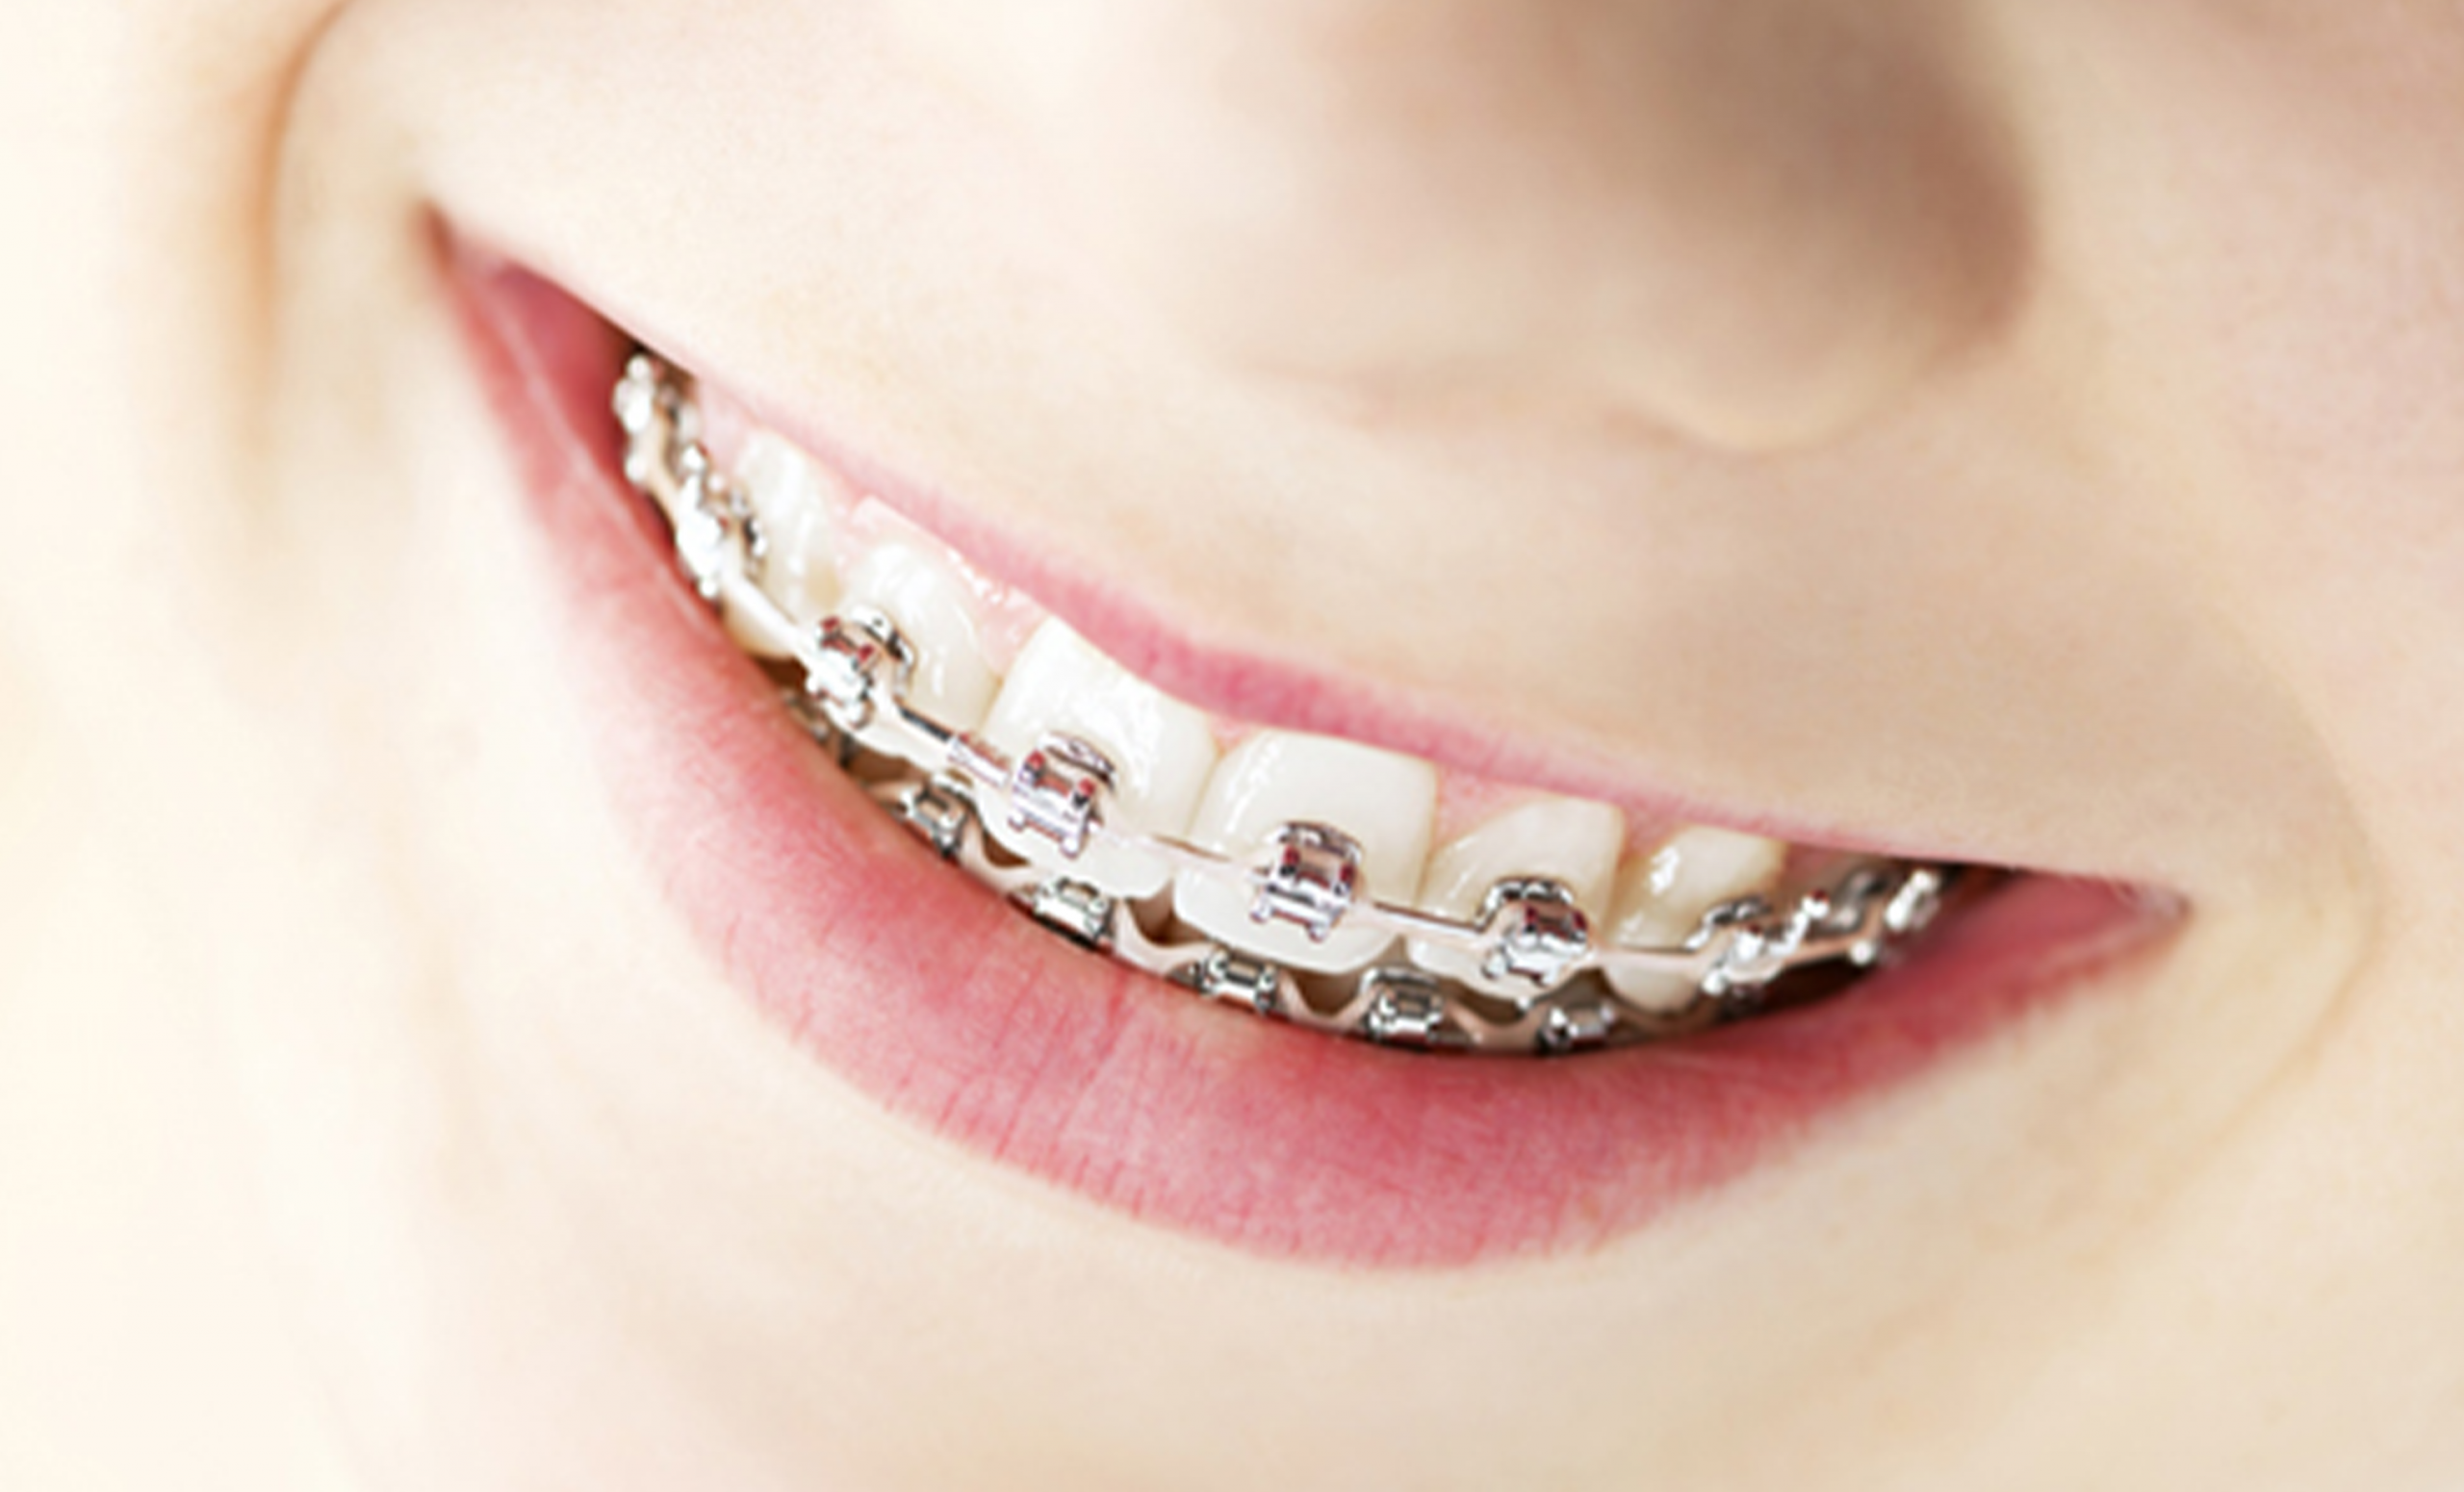 Orthodontics and Whole Body Health